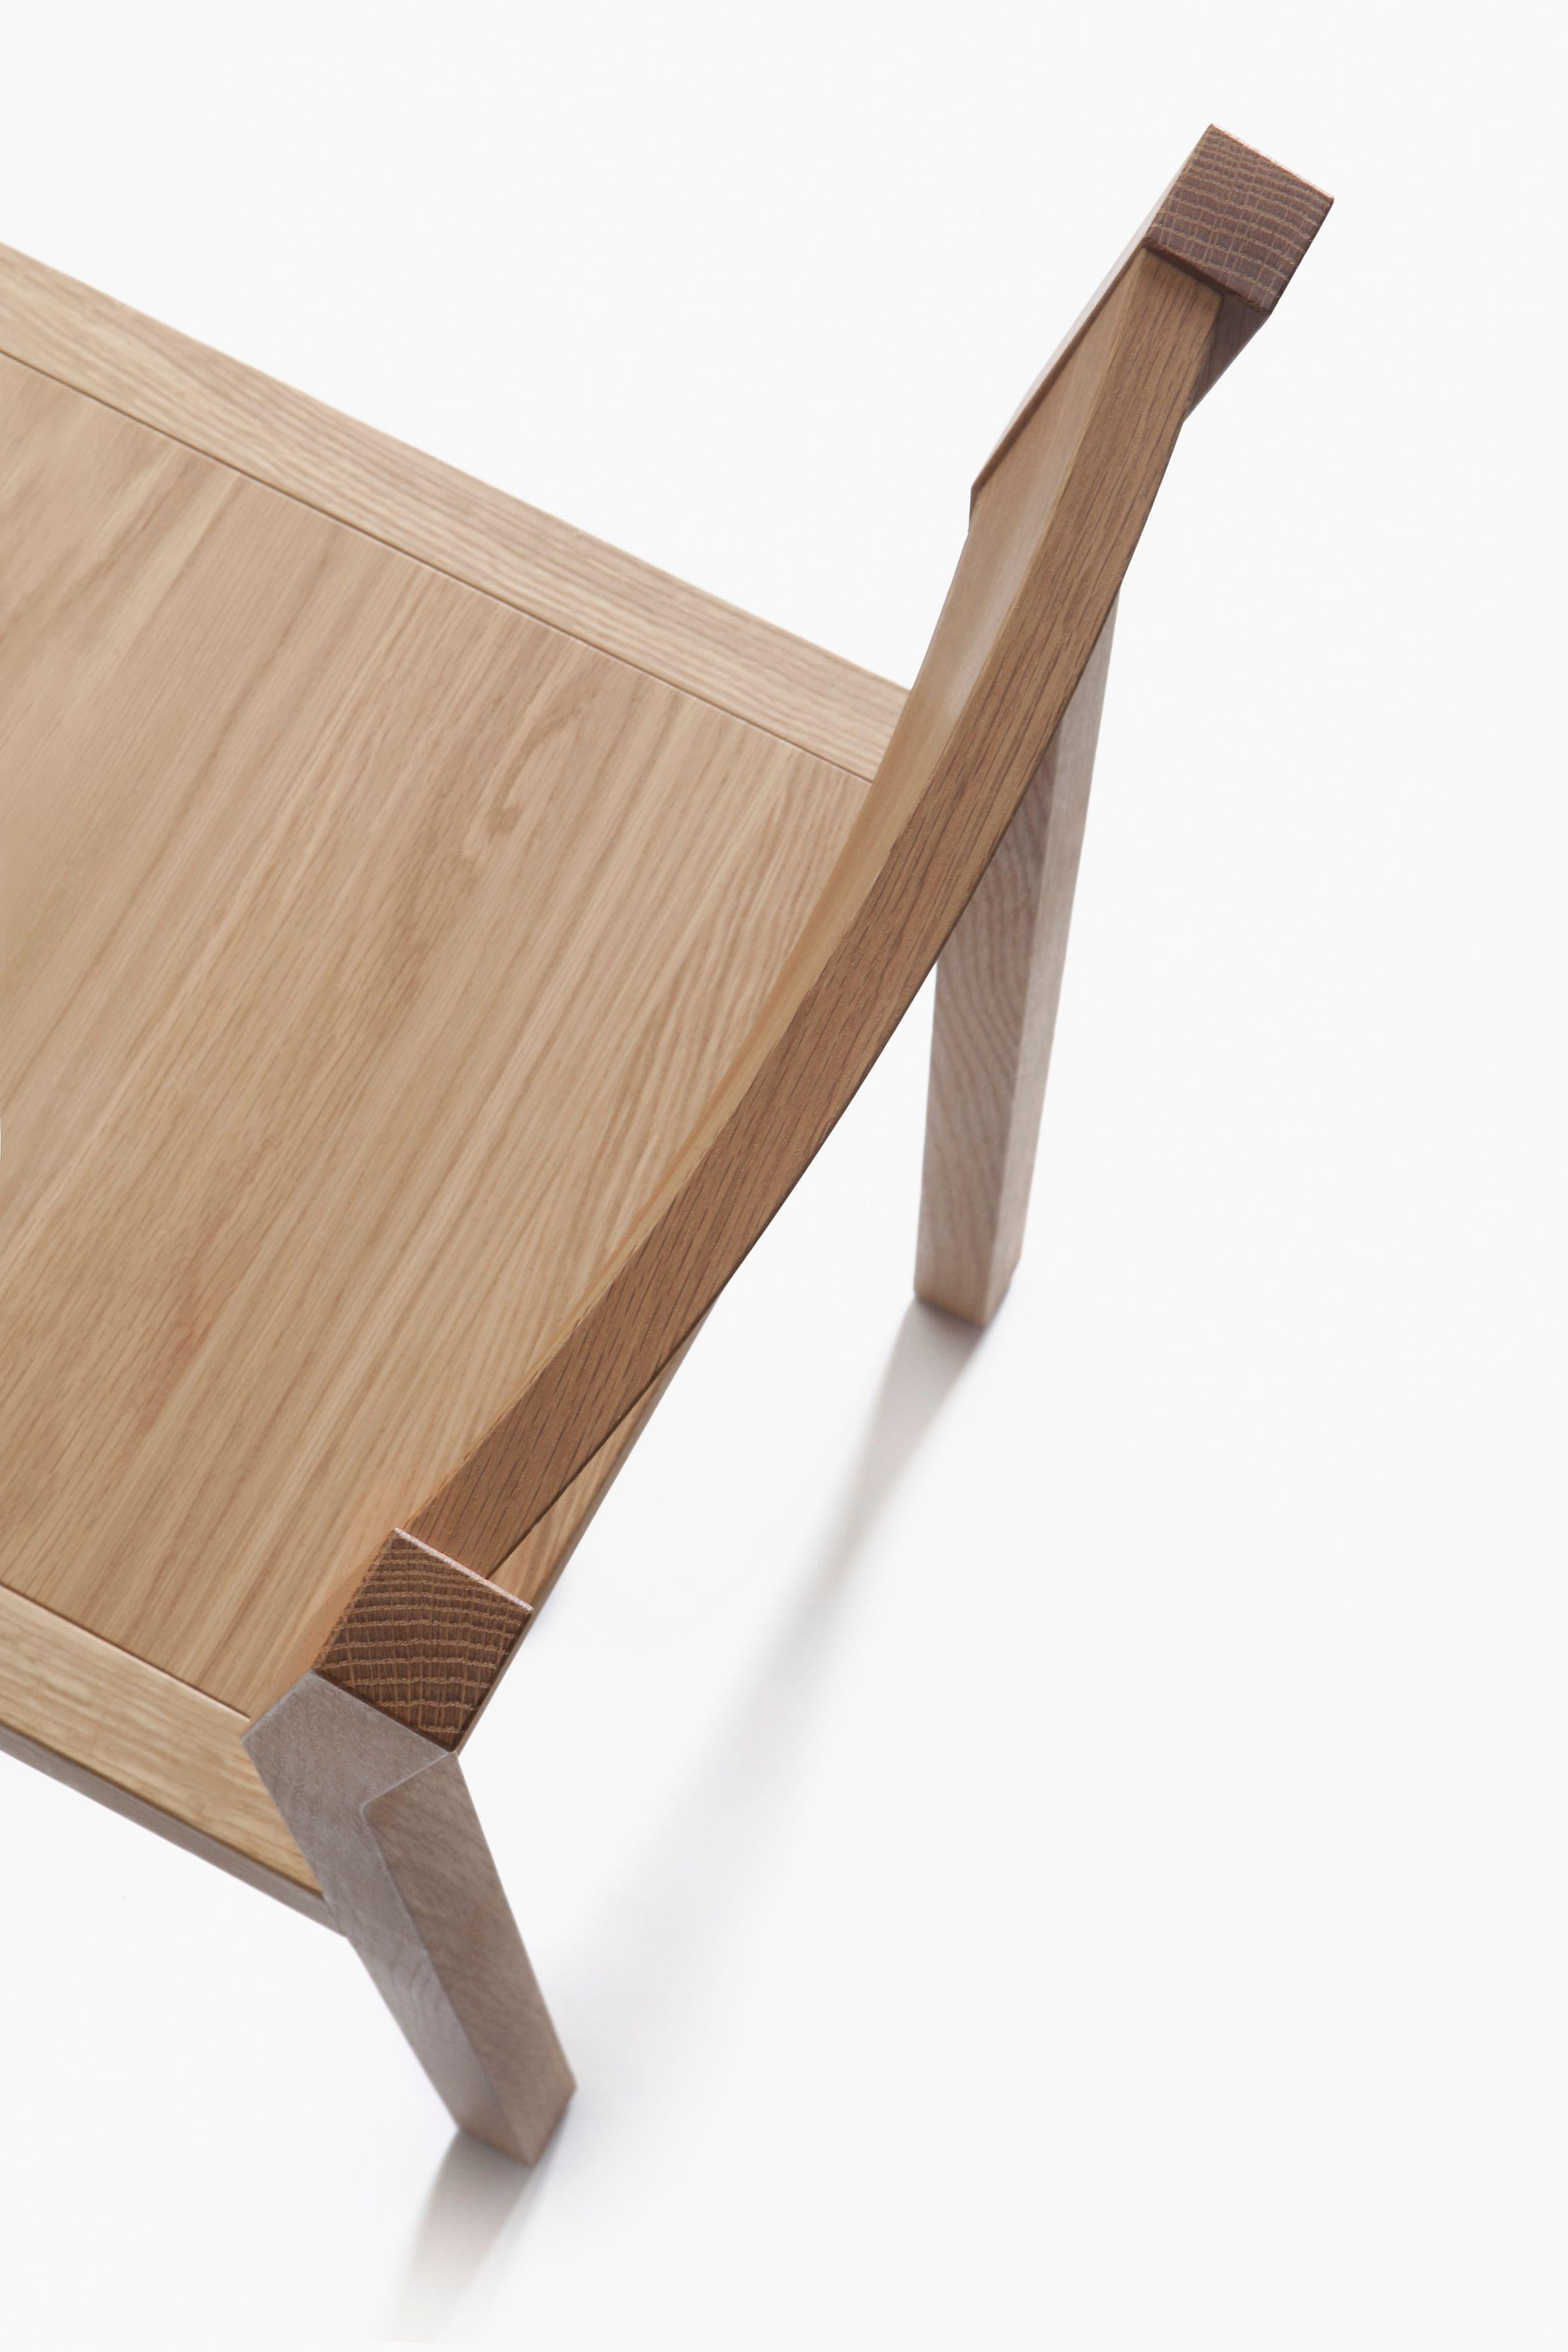 Scandinavian Modern Seminar KVT1 Solid Ash Chair by Kari Virtanen For Sale